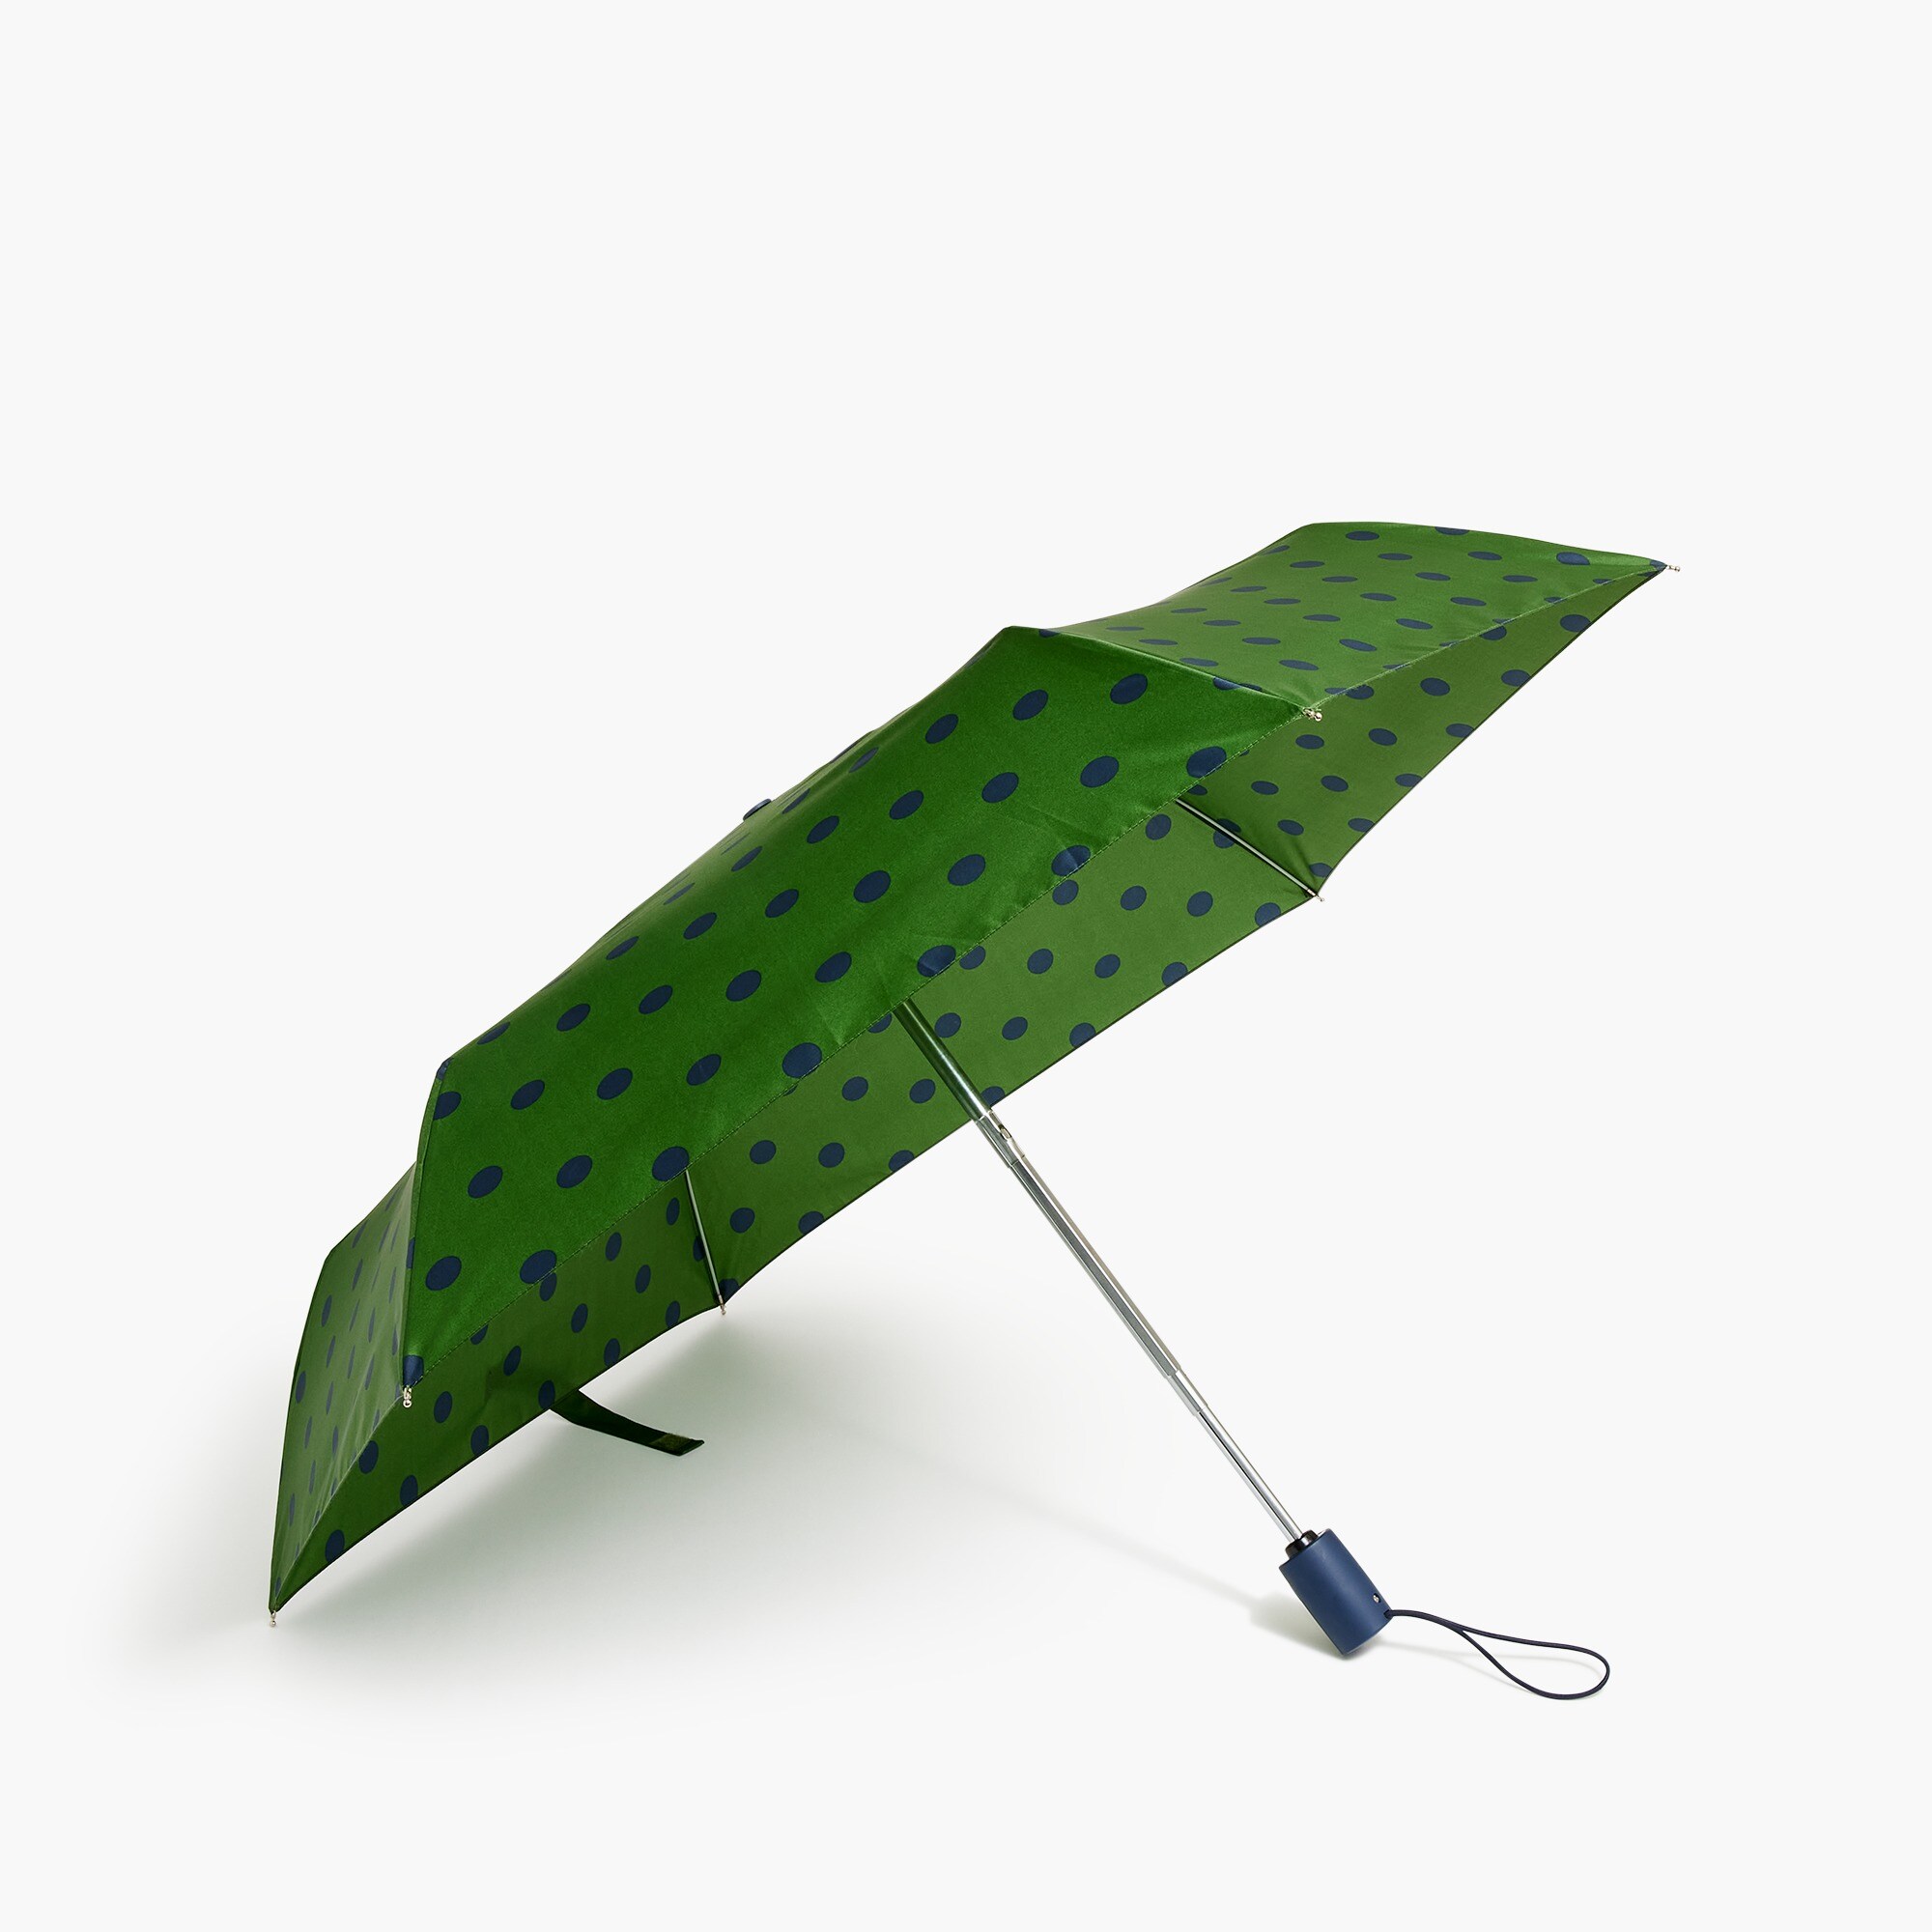  Printed umbrella